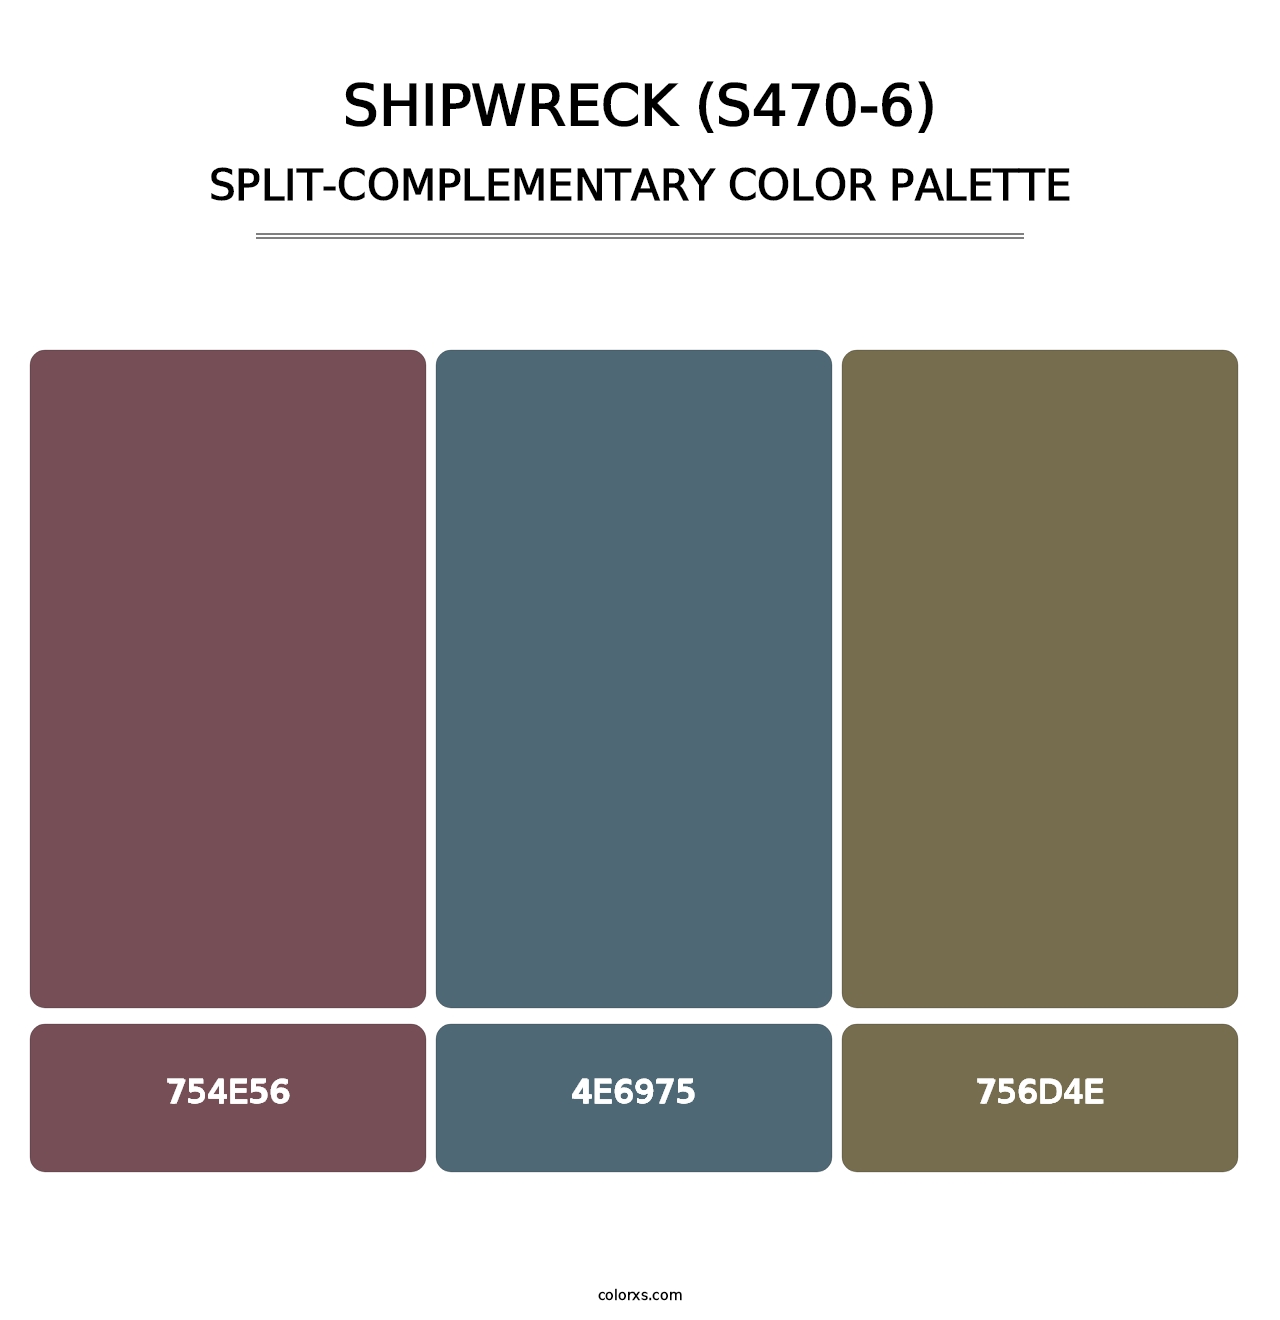 Shipwreck (S470-6) - Split-Complementary Color Palette